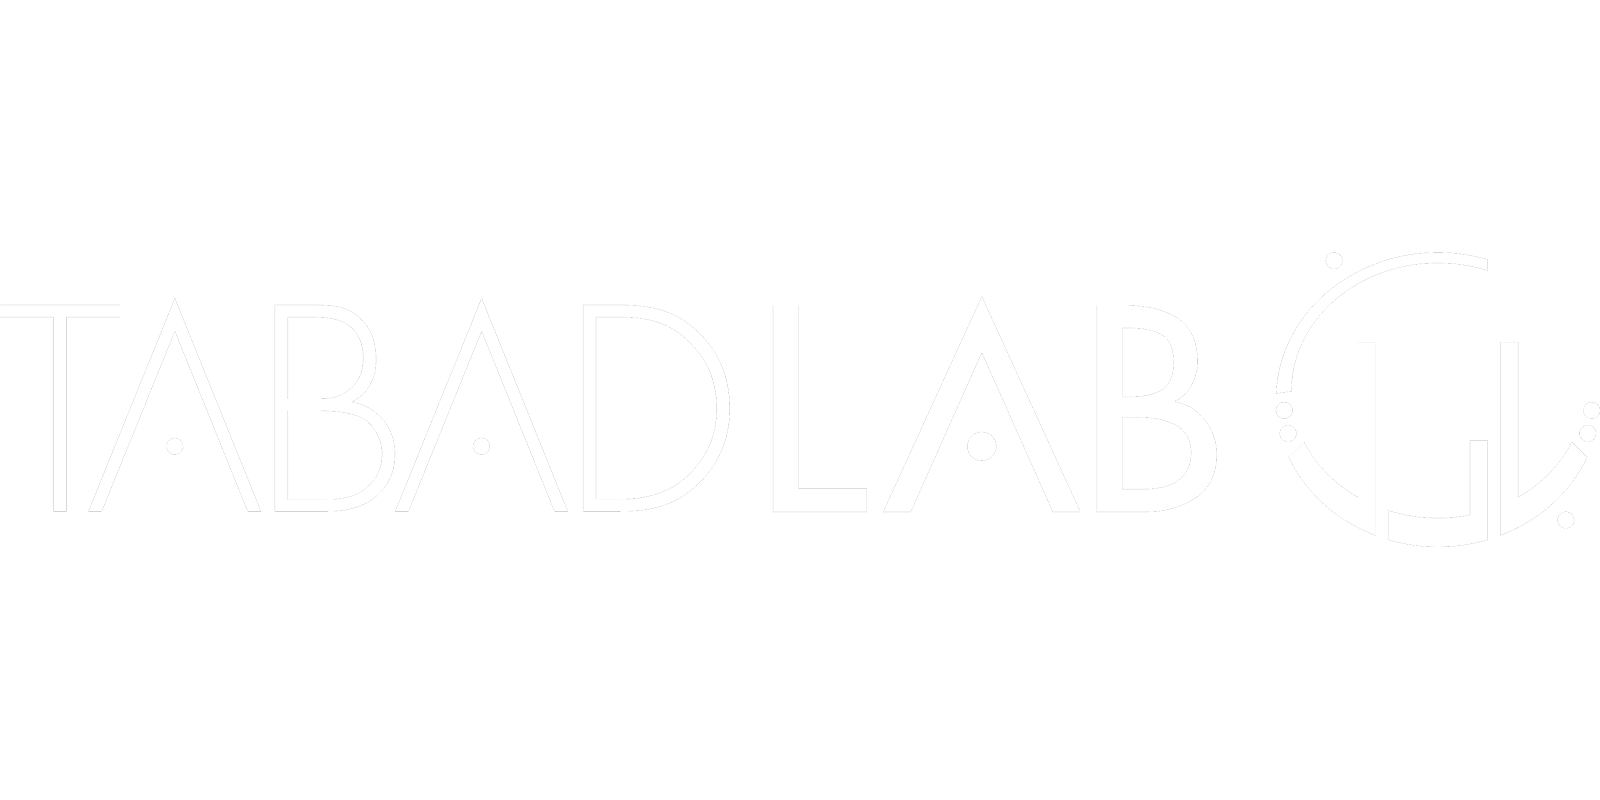 Tabadlab | Understanding Change